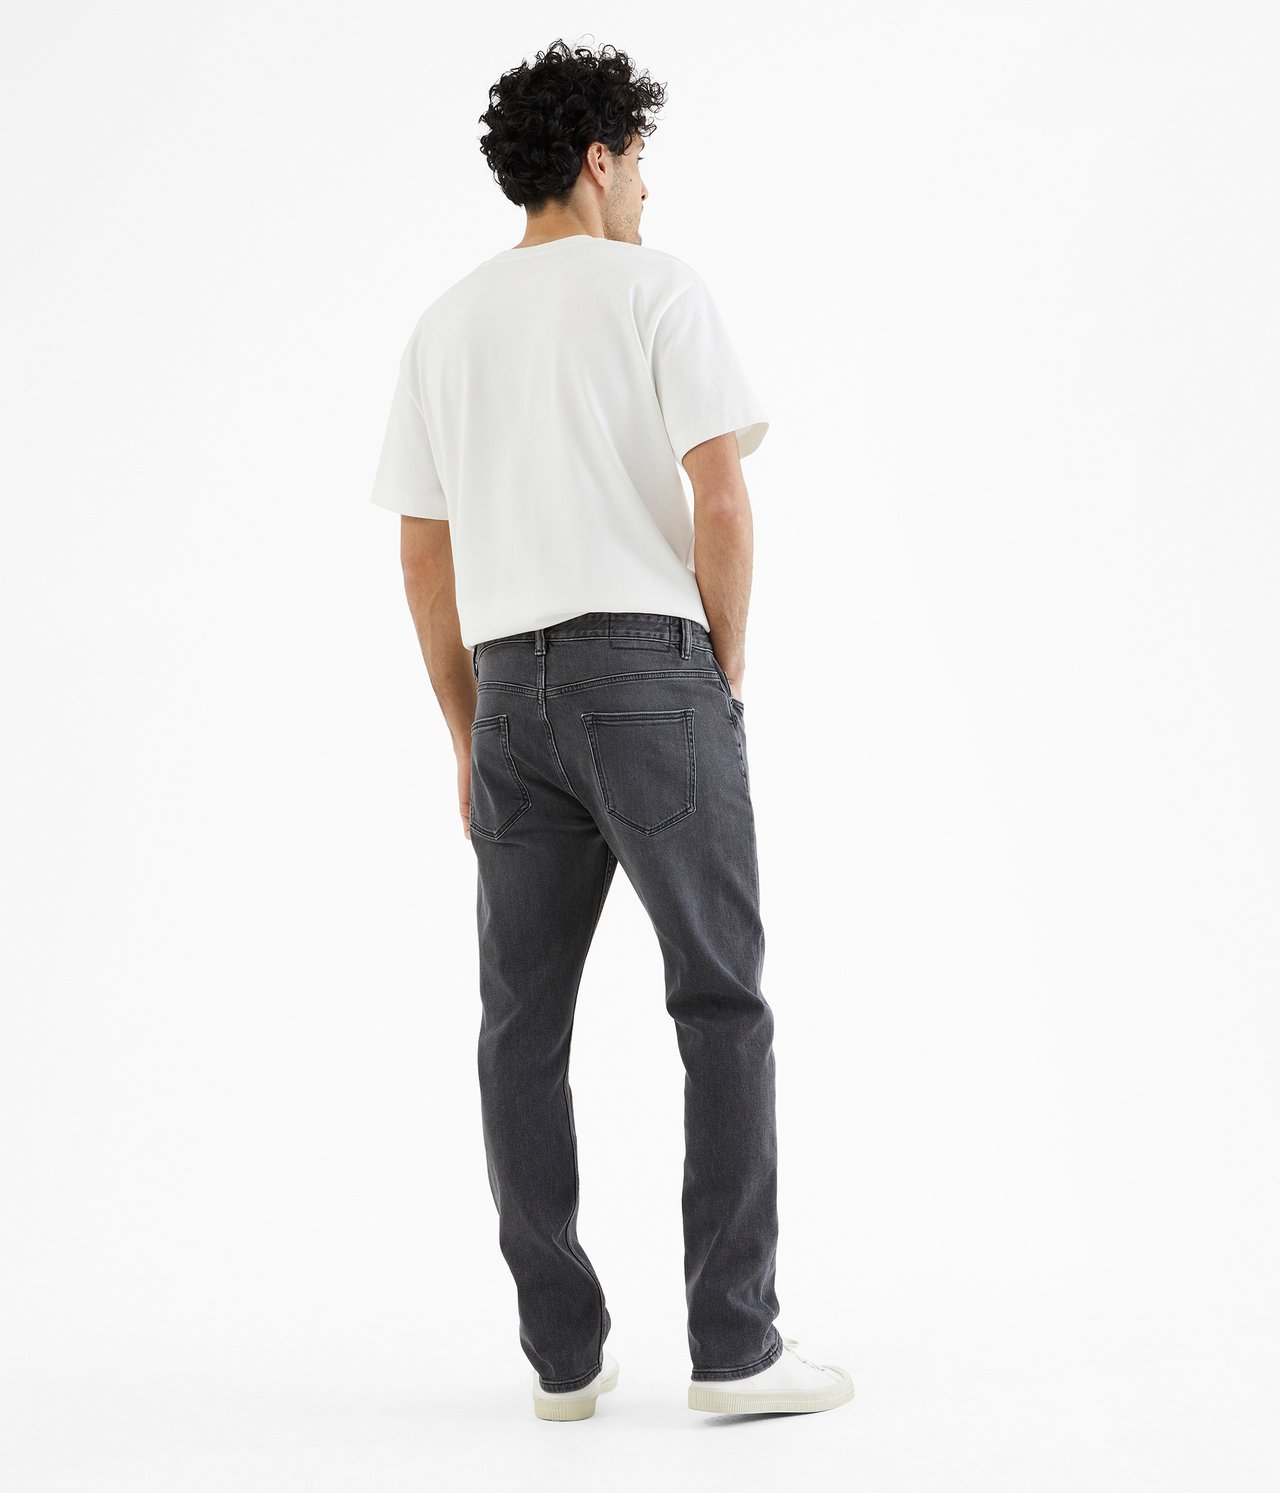 Hank regular jeans - Silvergrå - 187cm / Storlek: 33/34 - 4